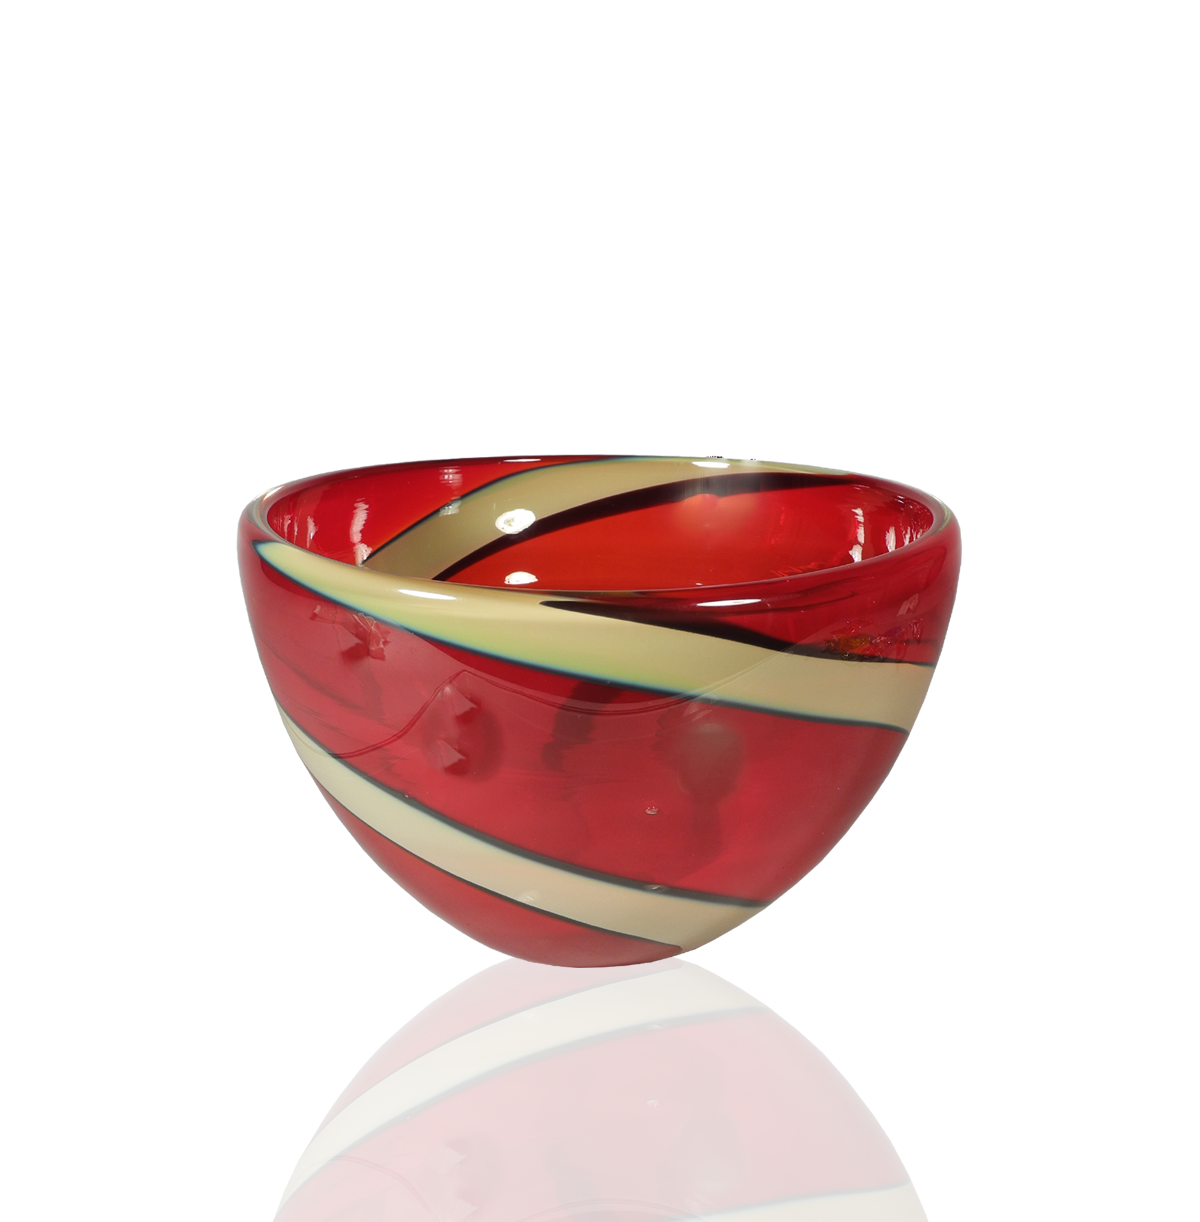 Swirl Bowls - Glass Art - Kingston Glass Studio - Blown Glass - Glass Blowing